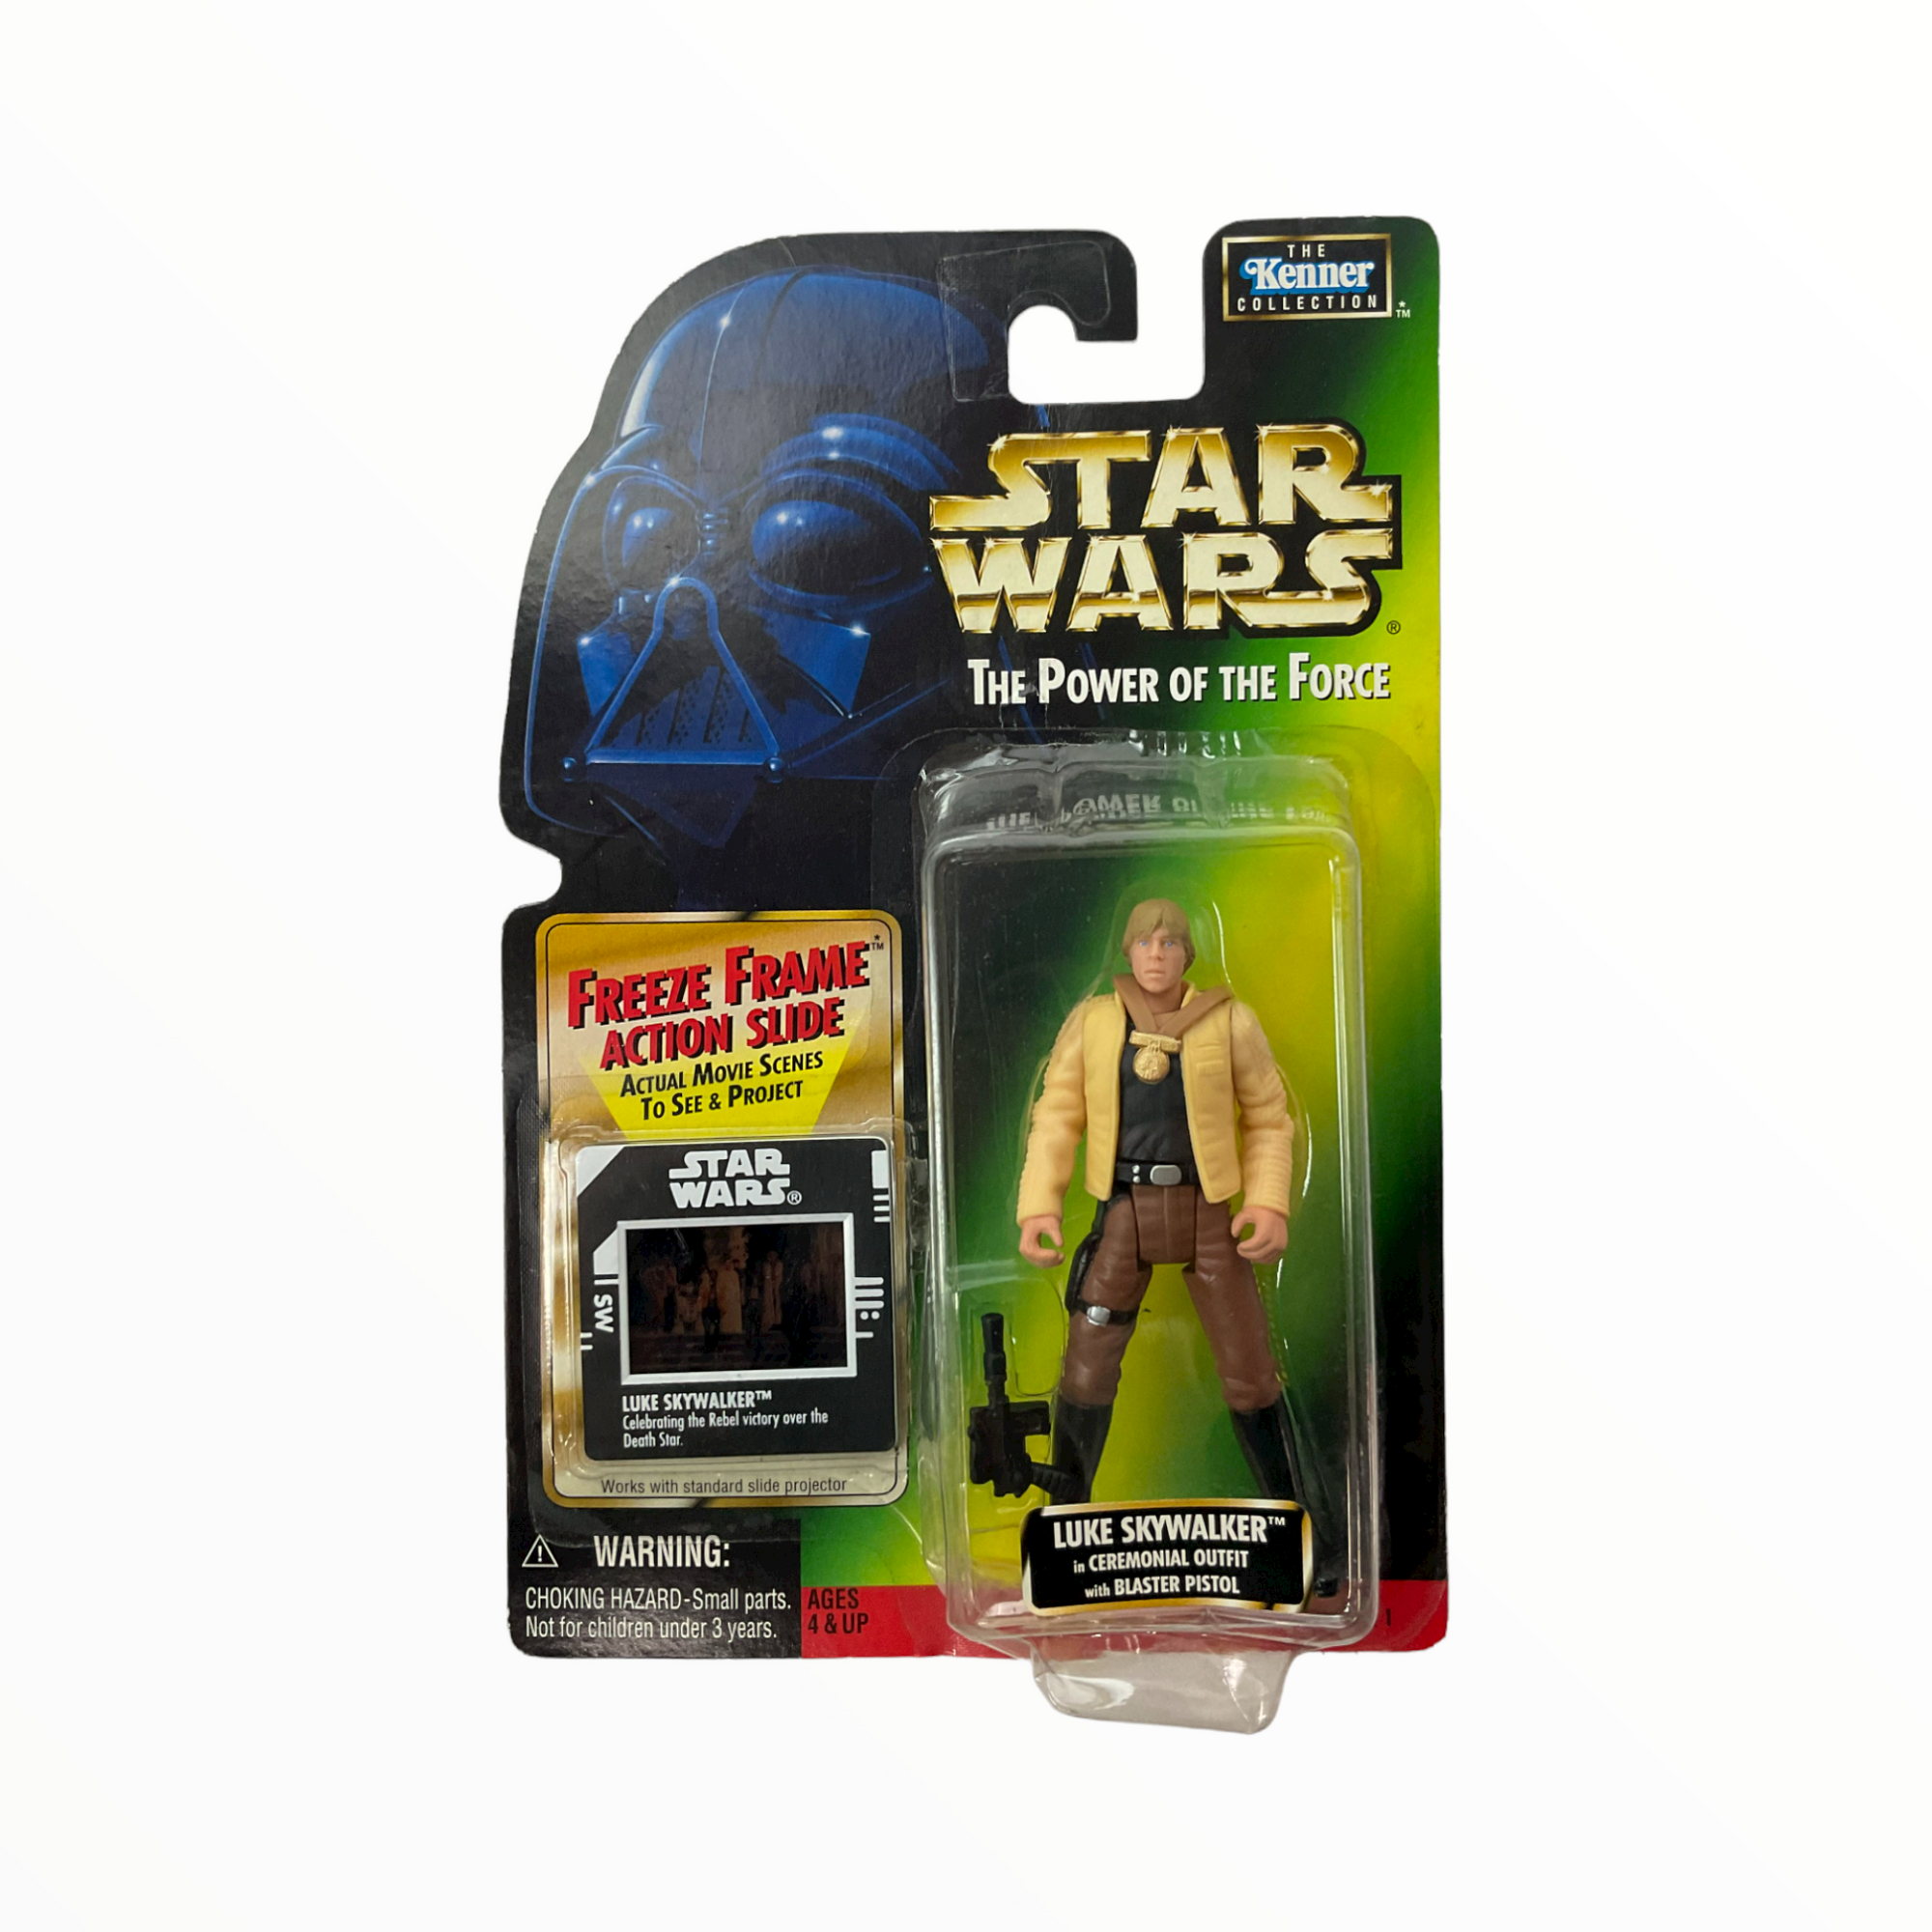 Star Wars The Power of the Force Green Card, Luke Skywalker Action Figure